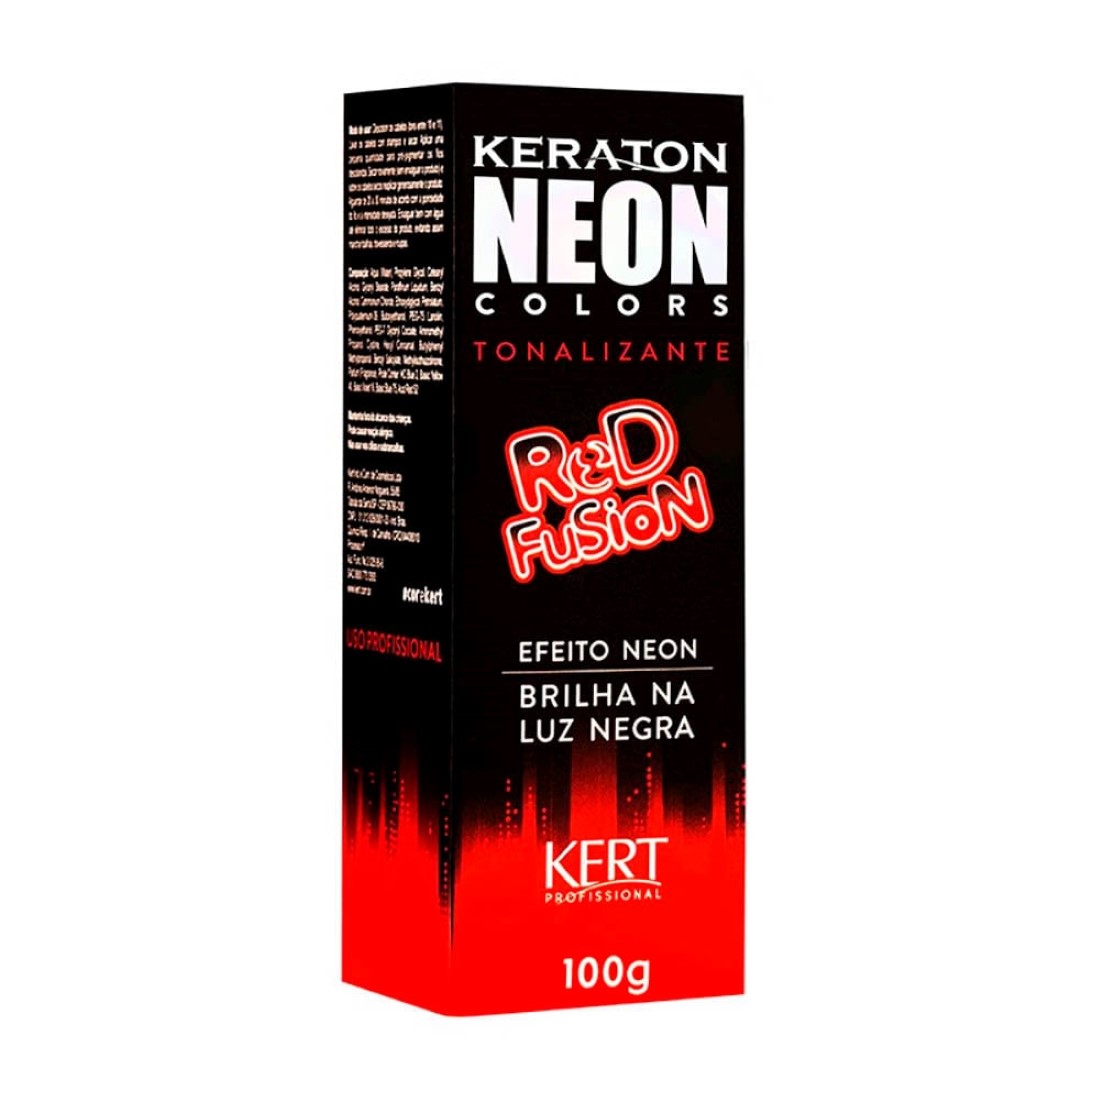 Tonalizante Keraton Neon Colors sem Amônia Efeito Neon Red Fuision 100g - Kert